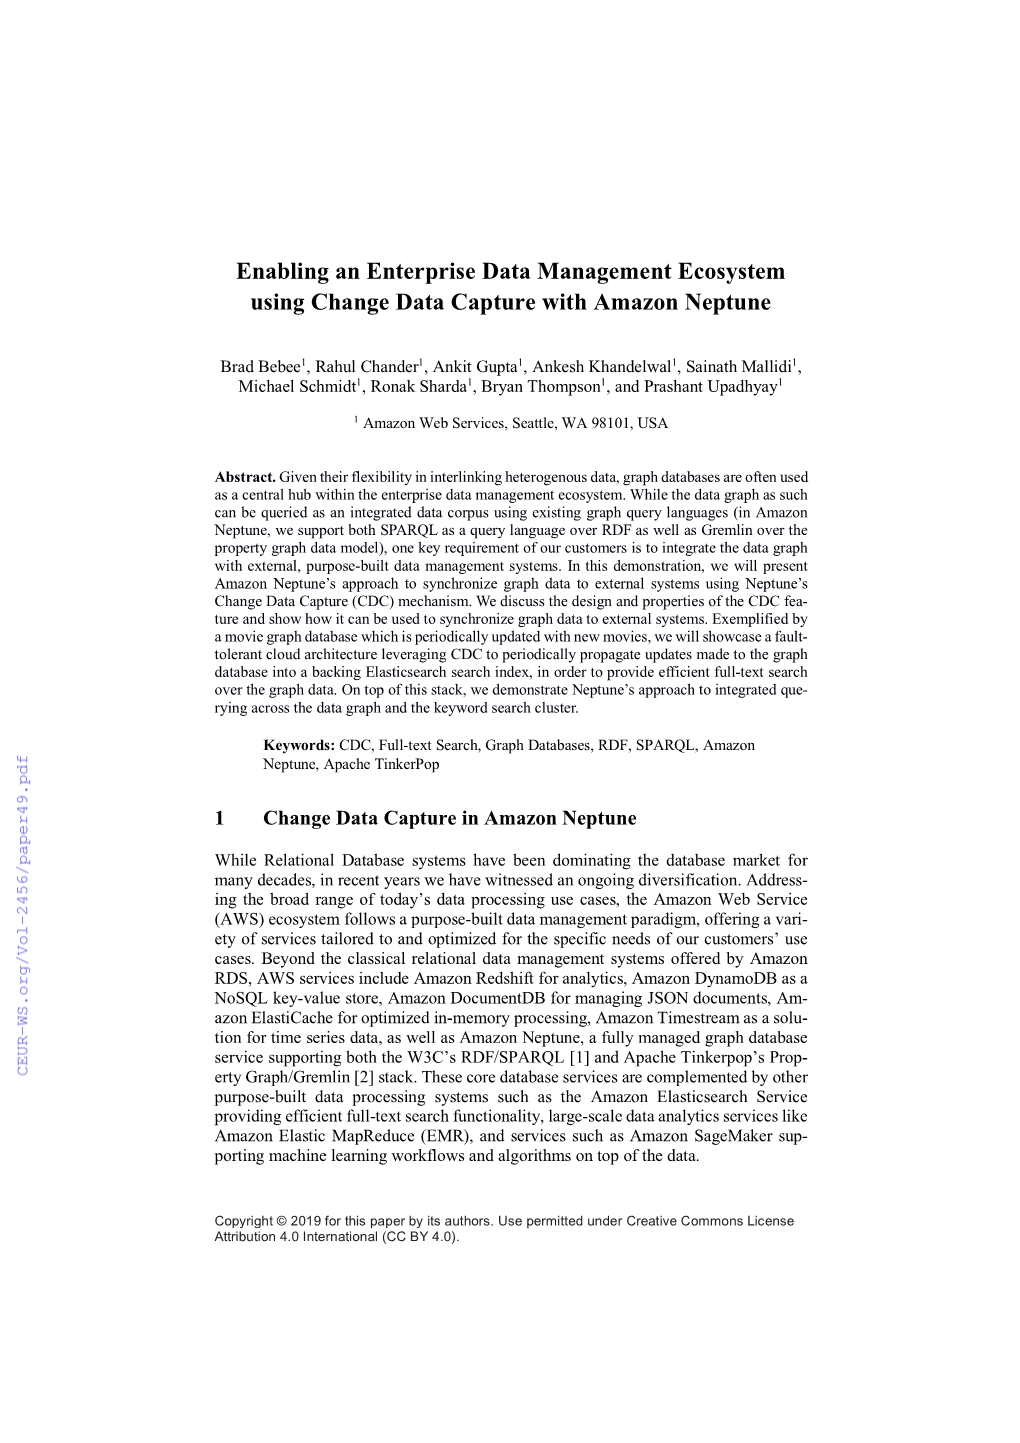 Enabling an Enterprise Data Management Ecosystem Using Change Data Capture with Amazon Neptune